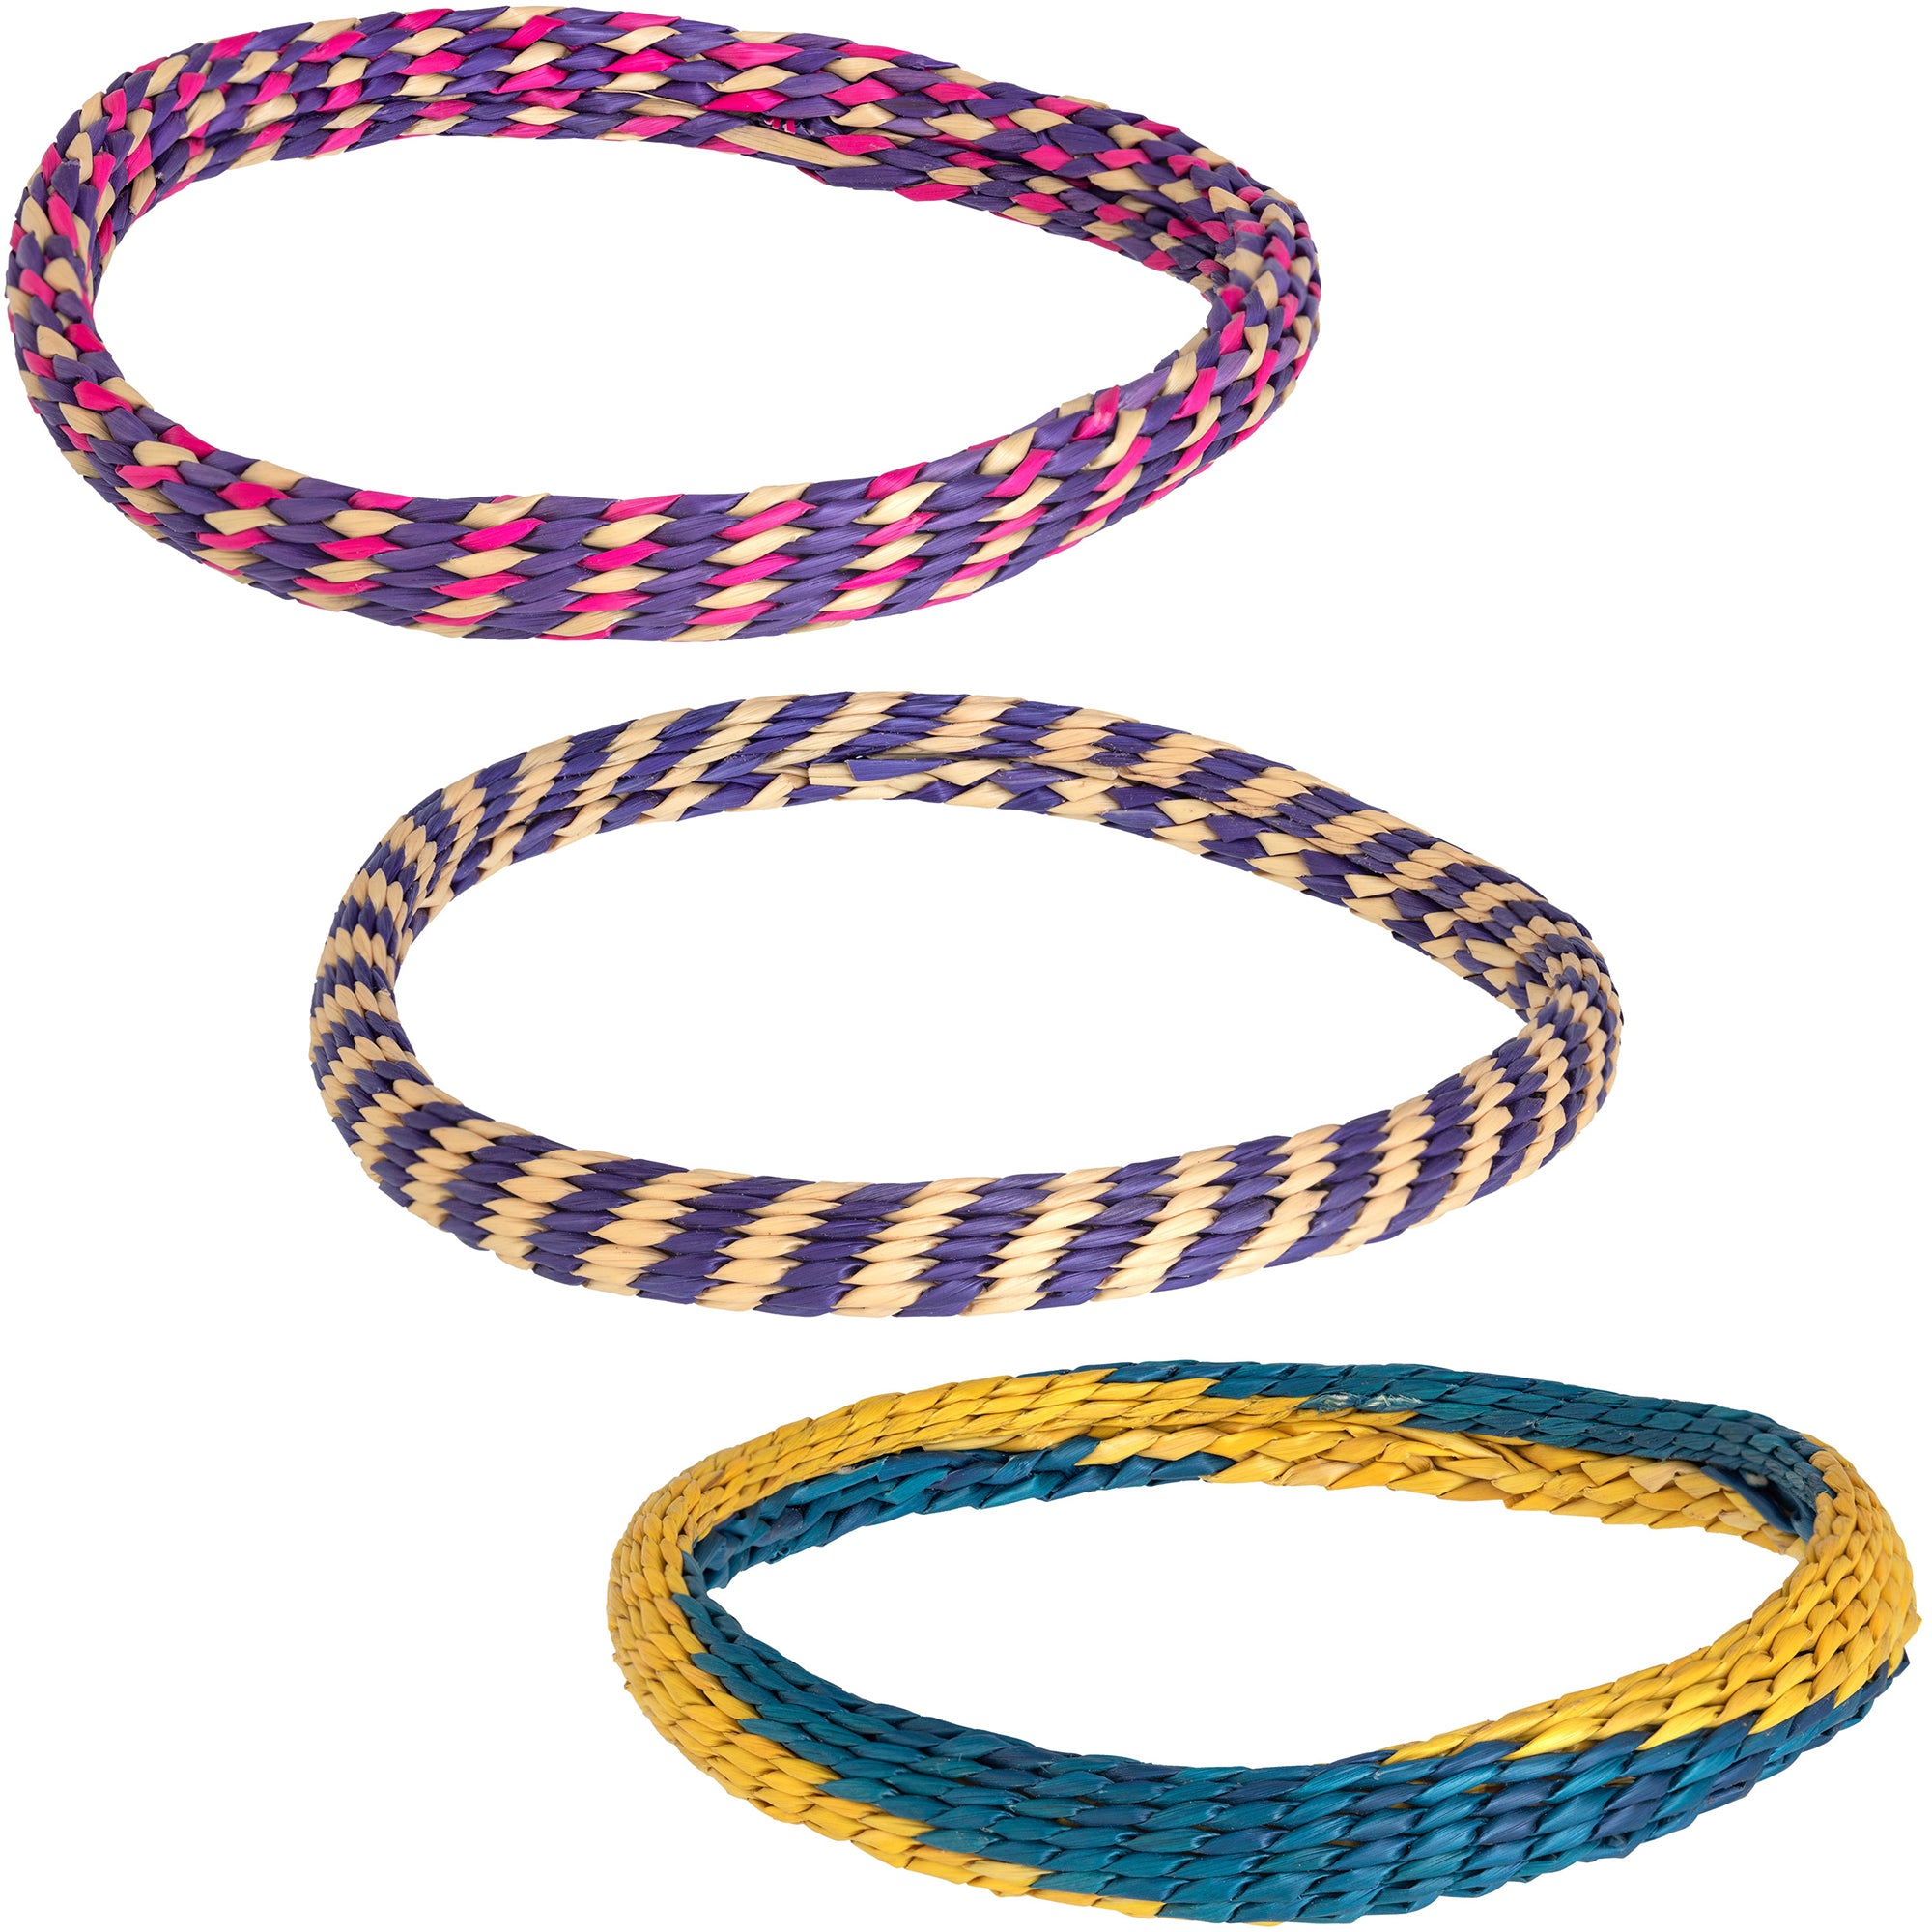 Handmade Woven Grass Bracelet - Set Of 3